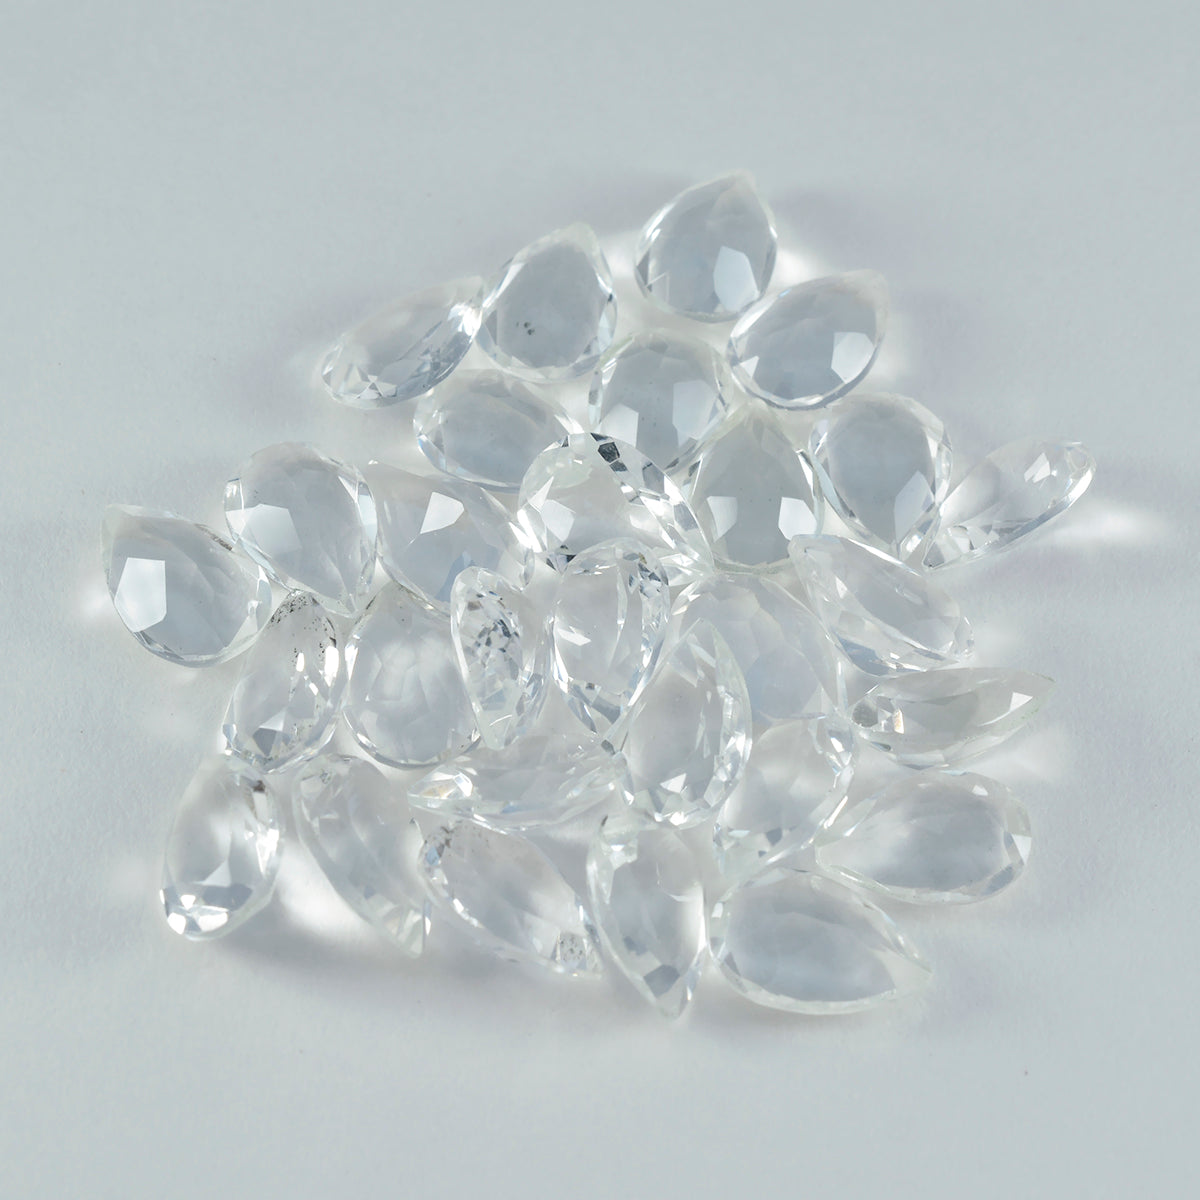 Riyogems 1PC White Crystal Quartz Faceted 6x9 mm Pear Shape fantastic Quality Stone